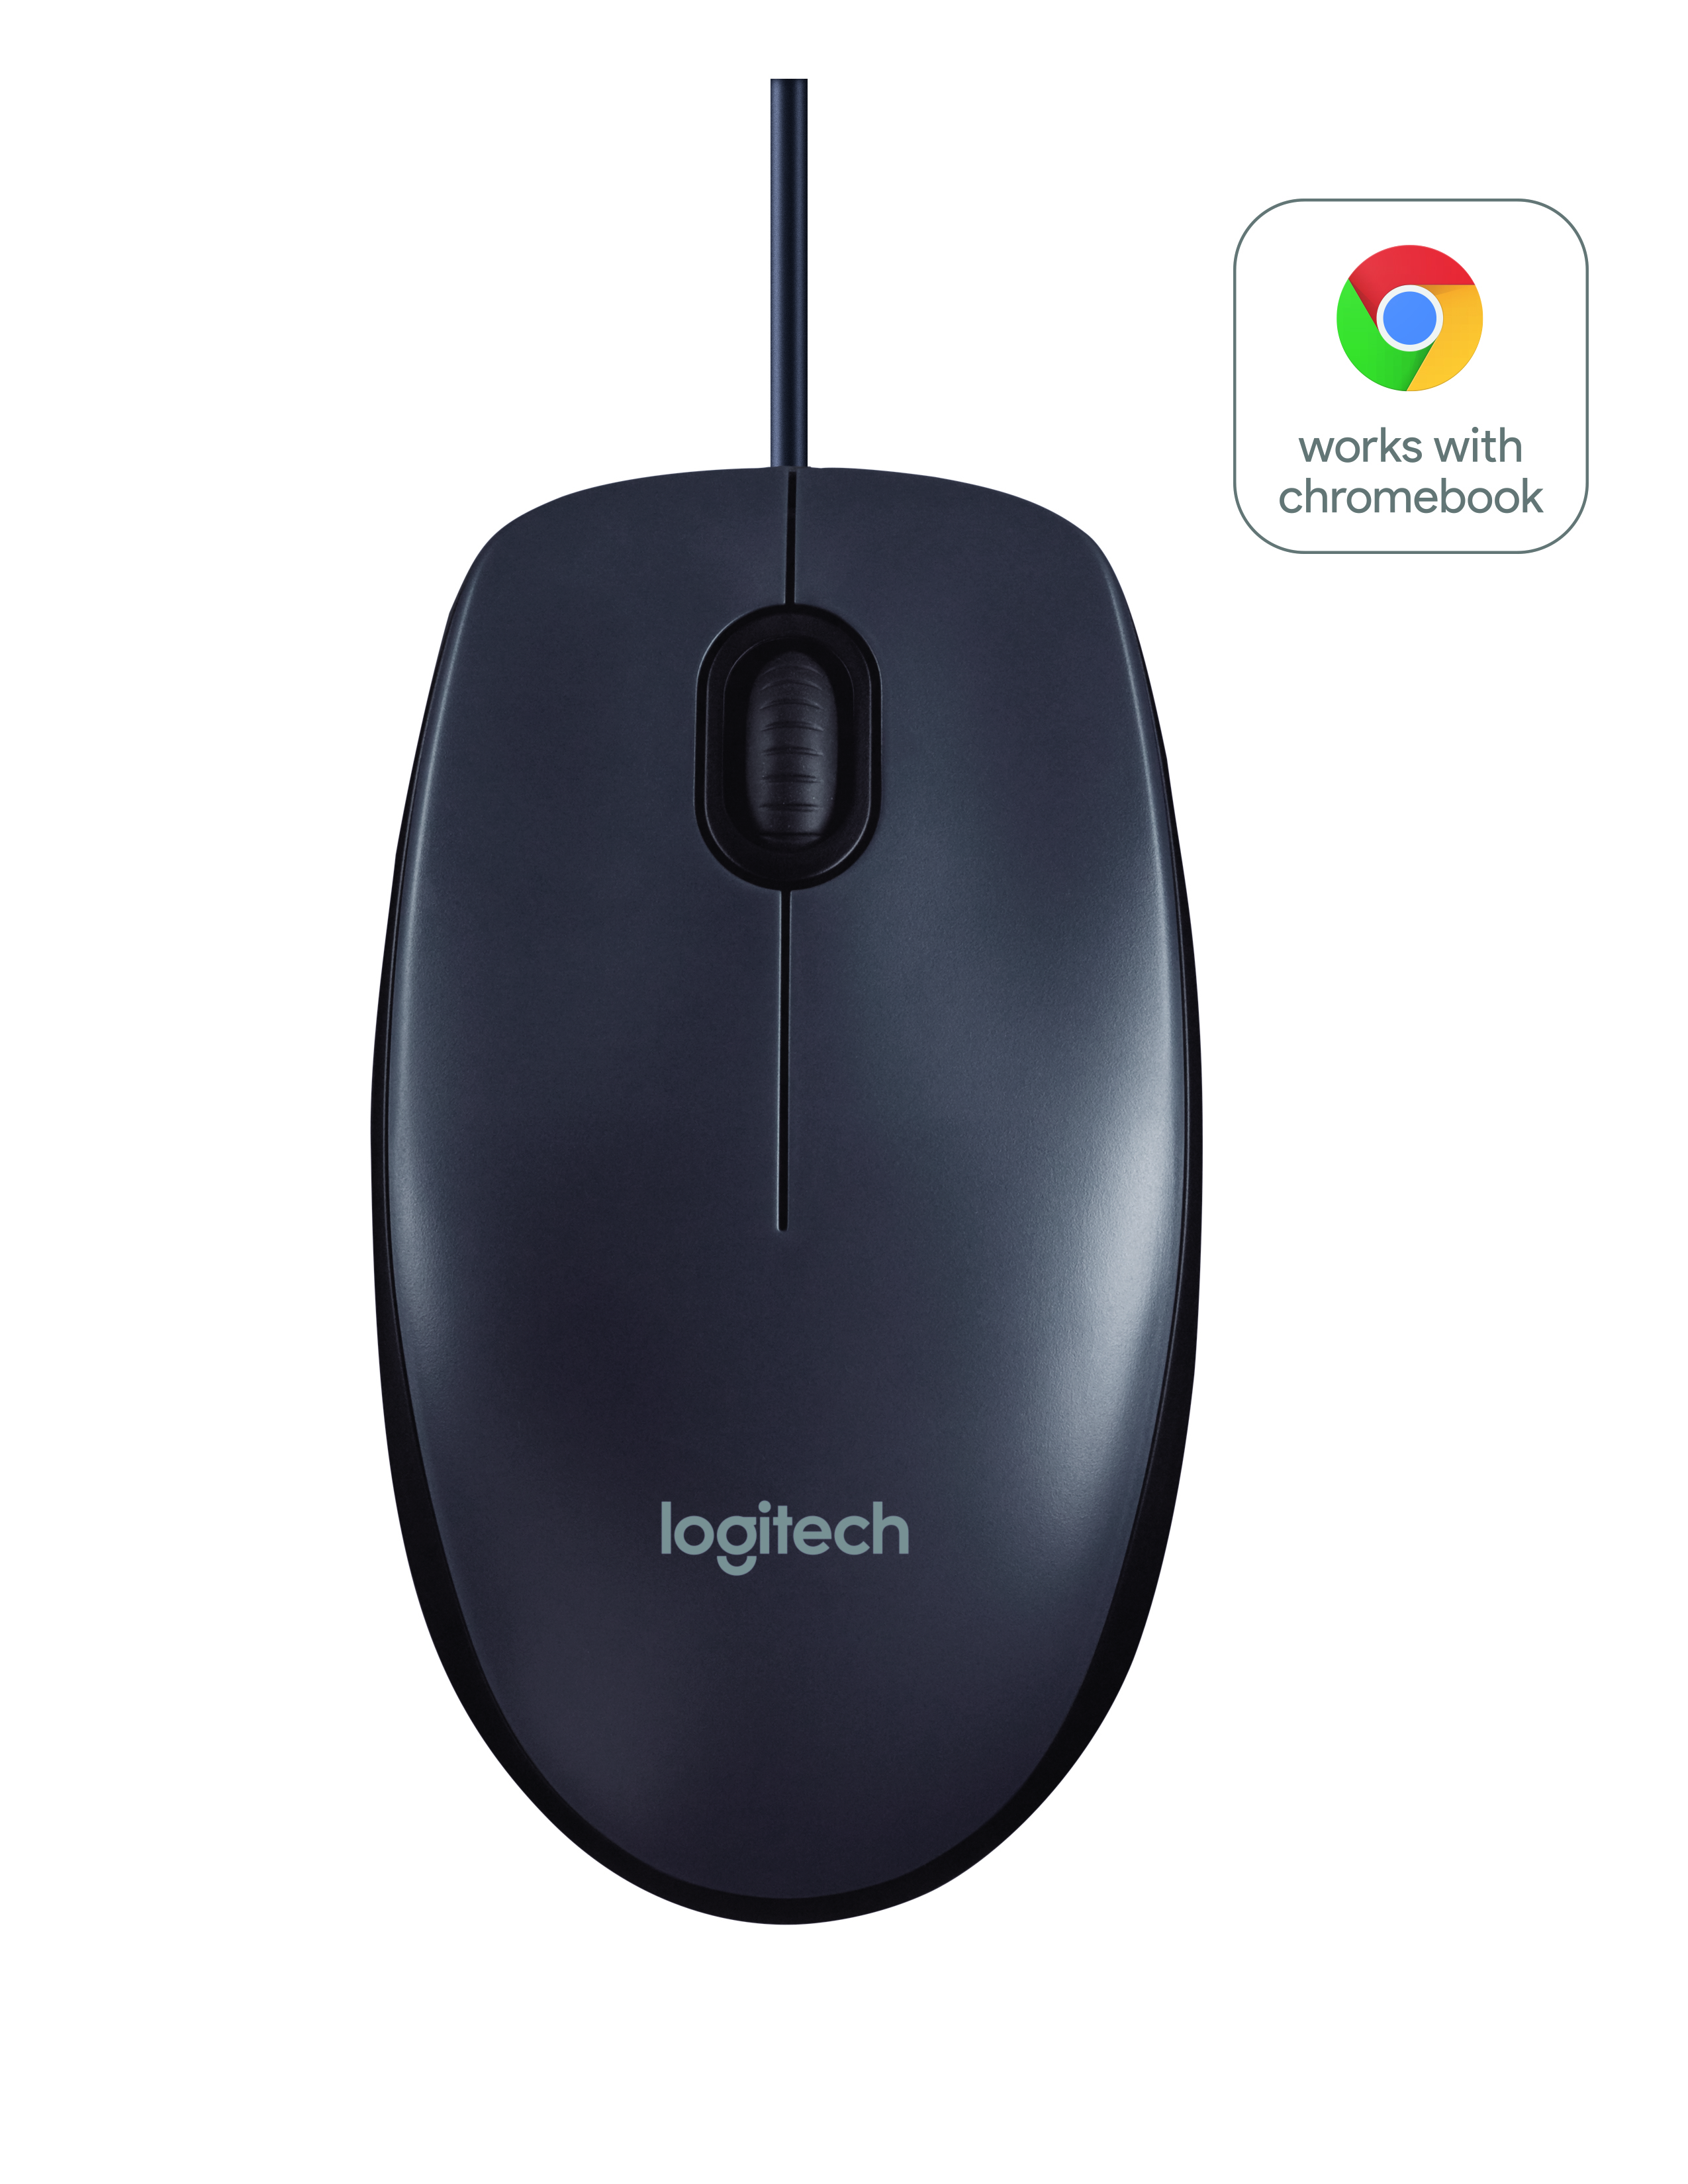 Logitech Mouse Driver For Mac Sierra